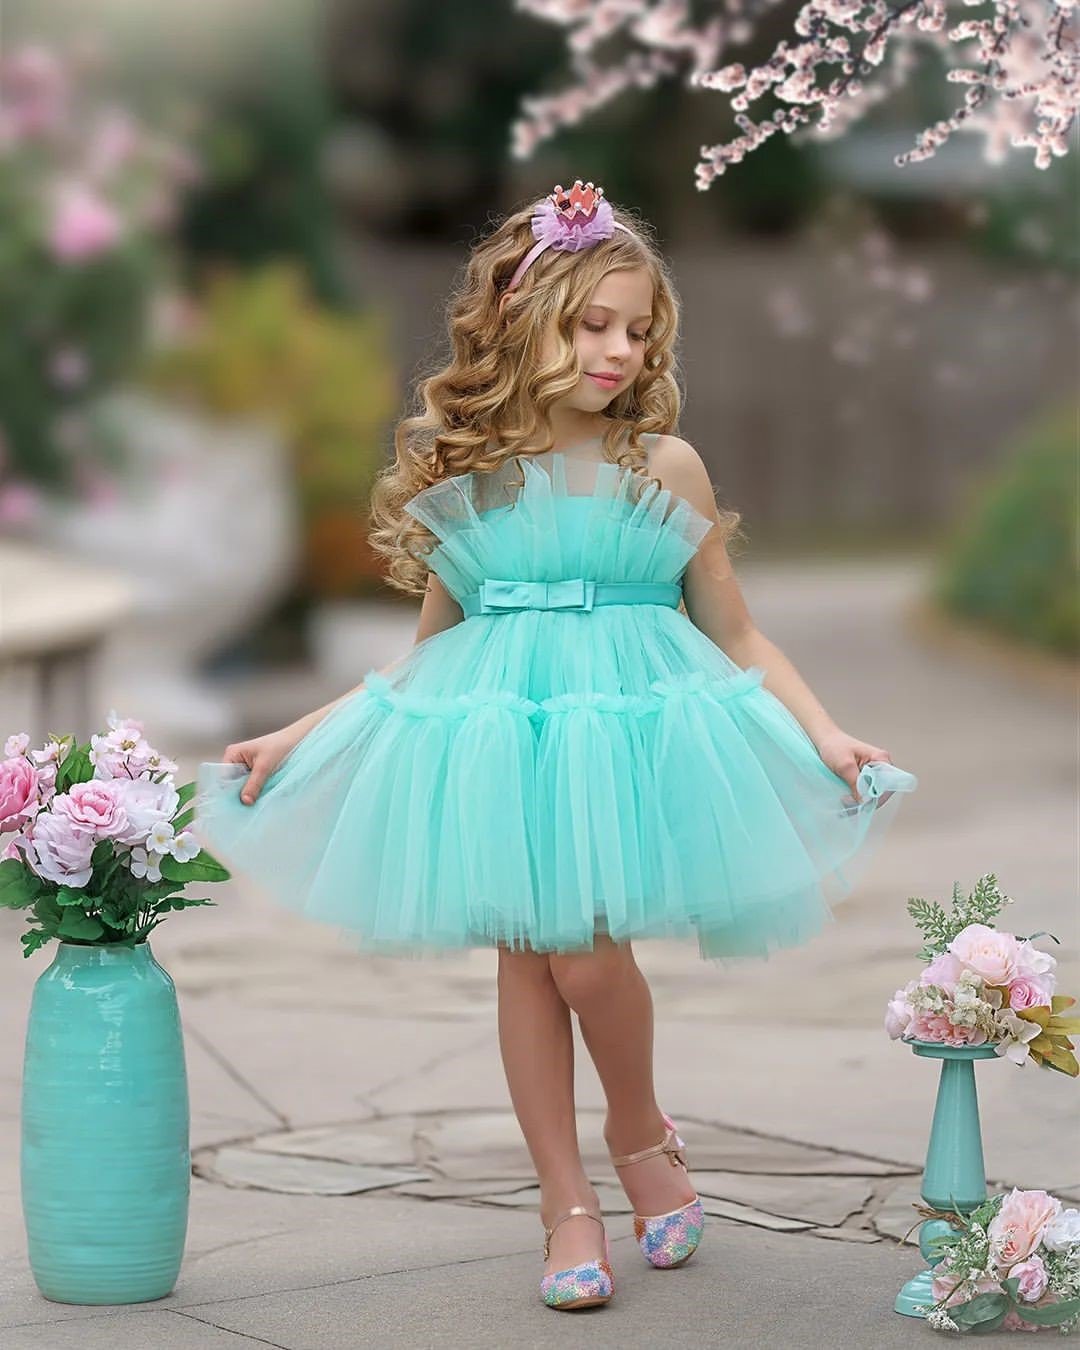 flower girl colorful dress with bow irinkac33